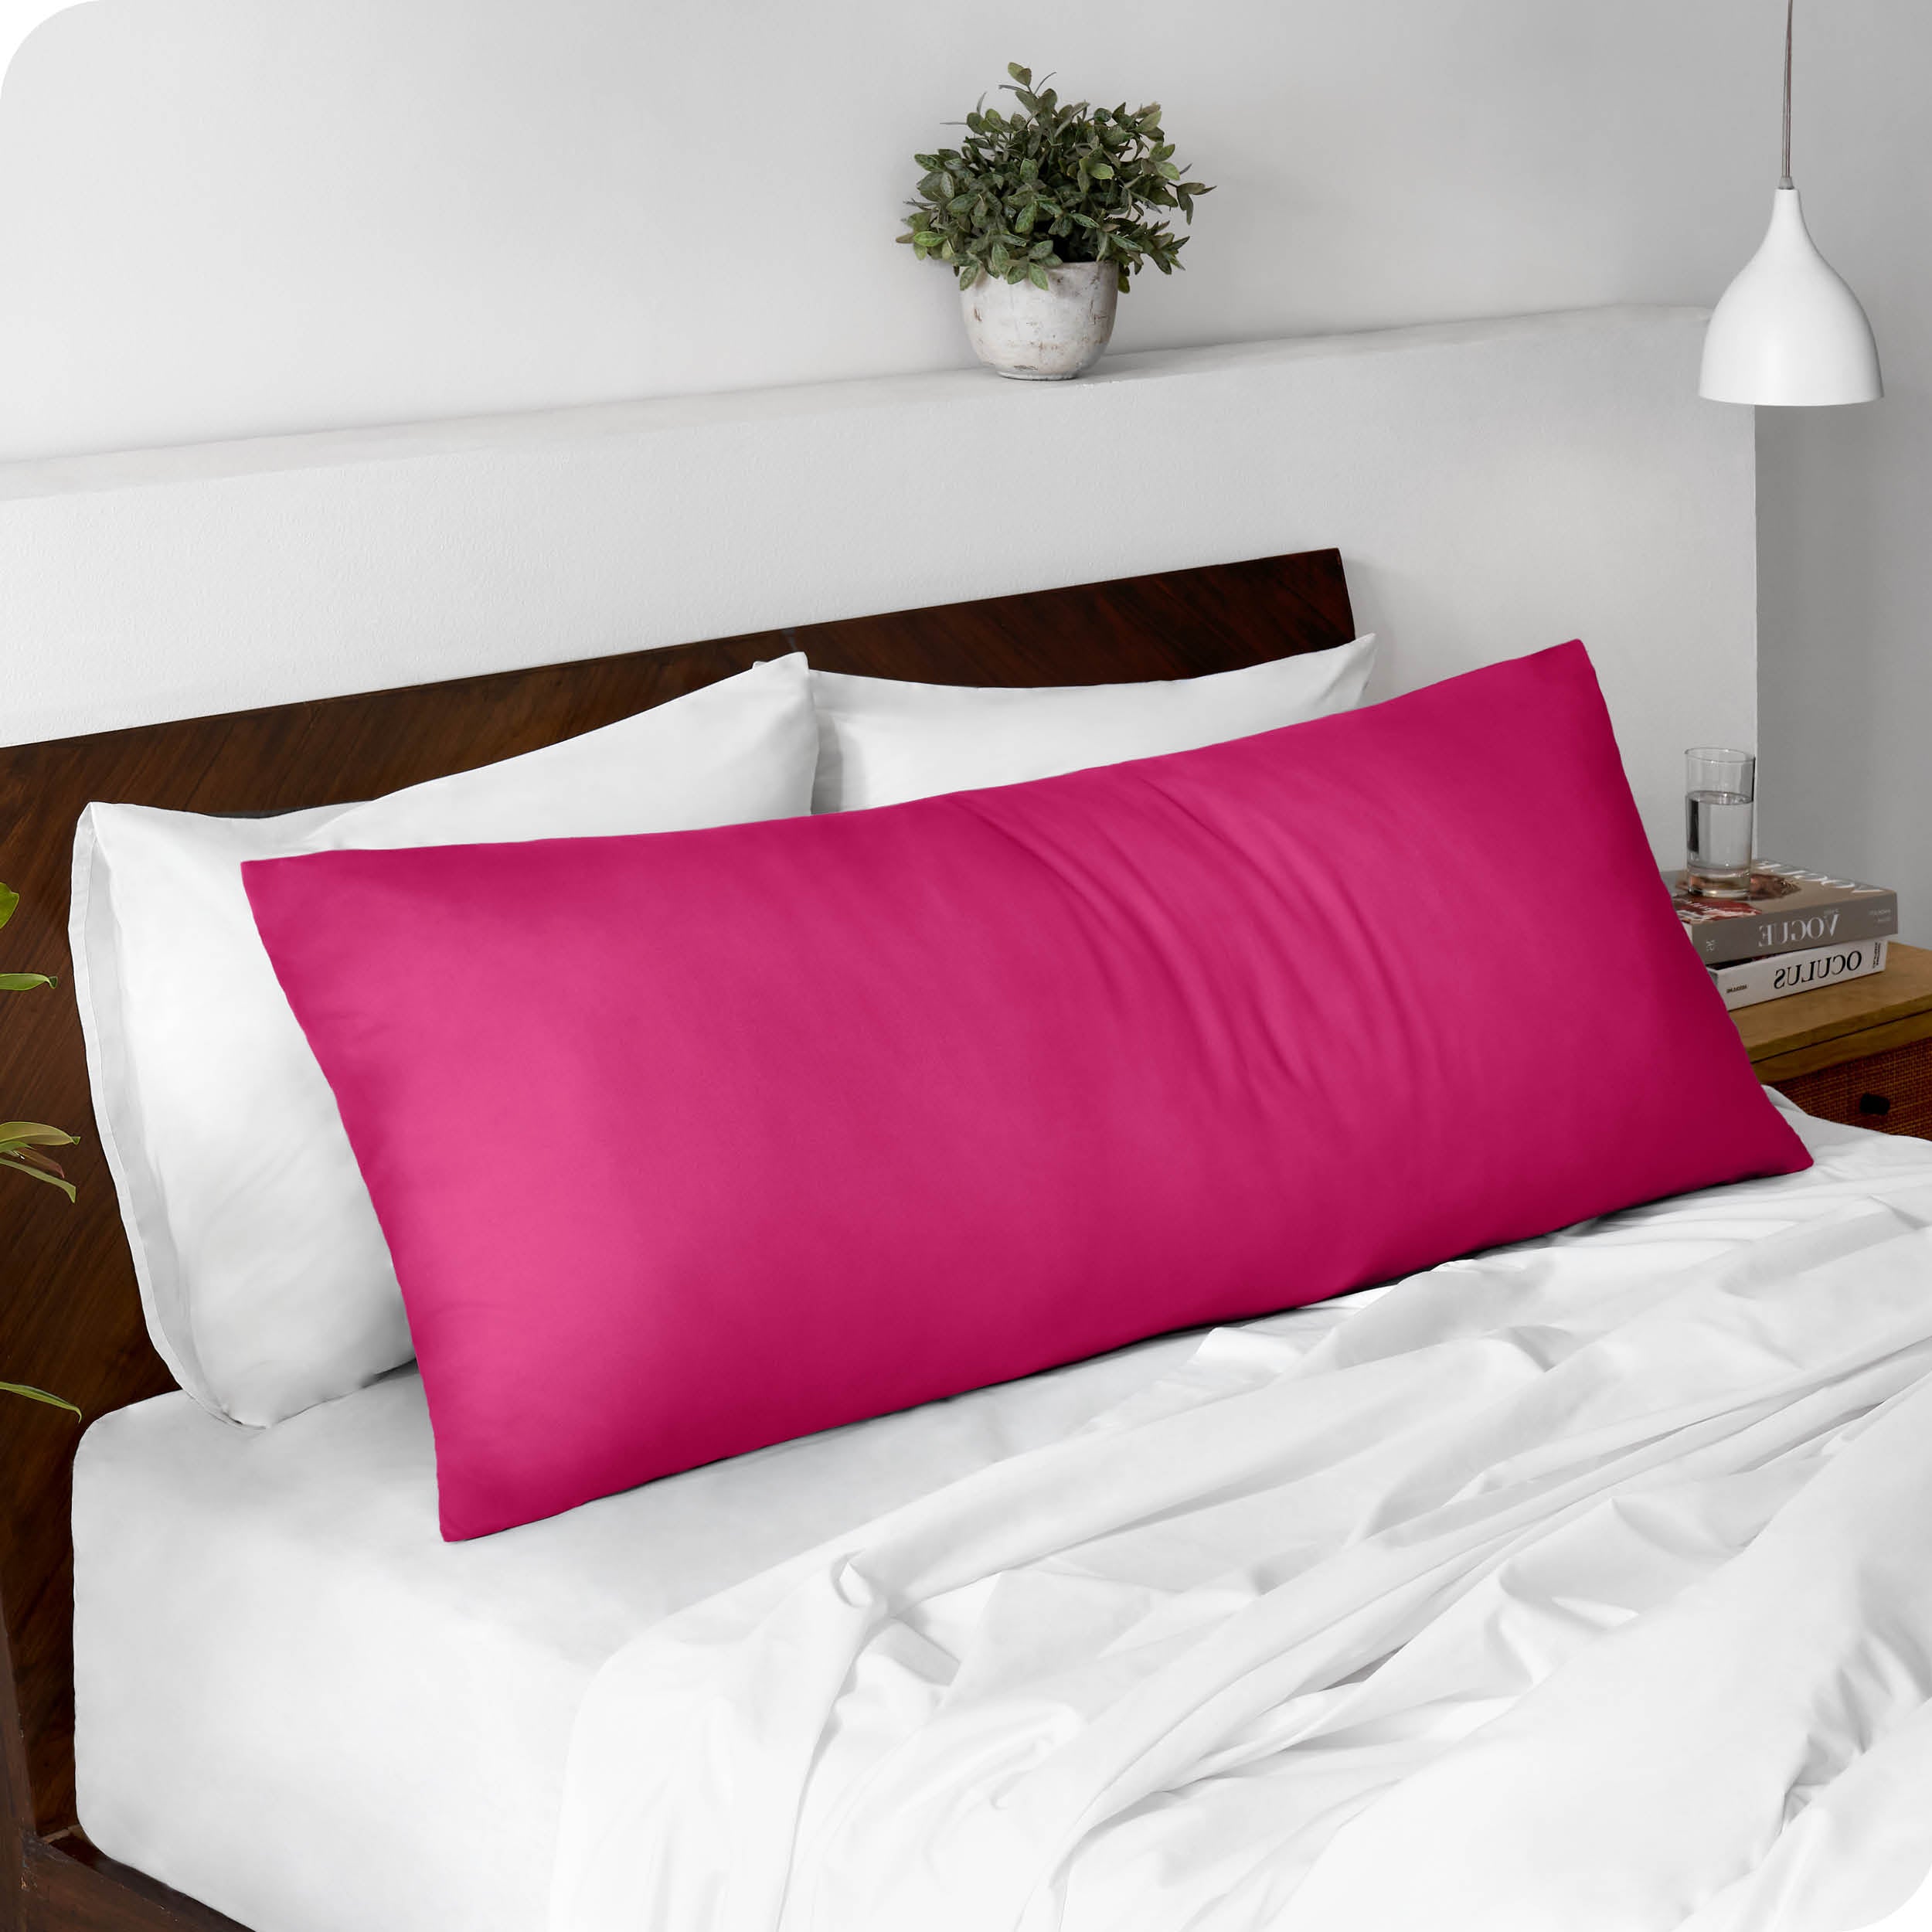 A body pillowcase on a pillow set against a headboard